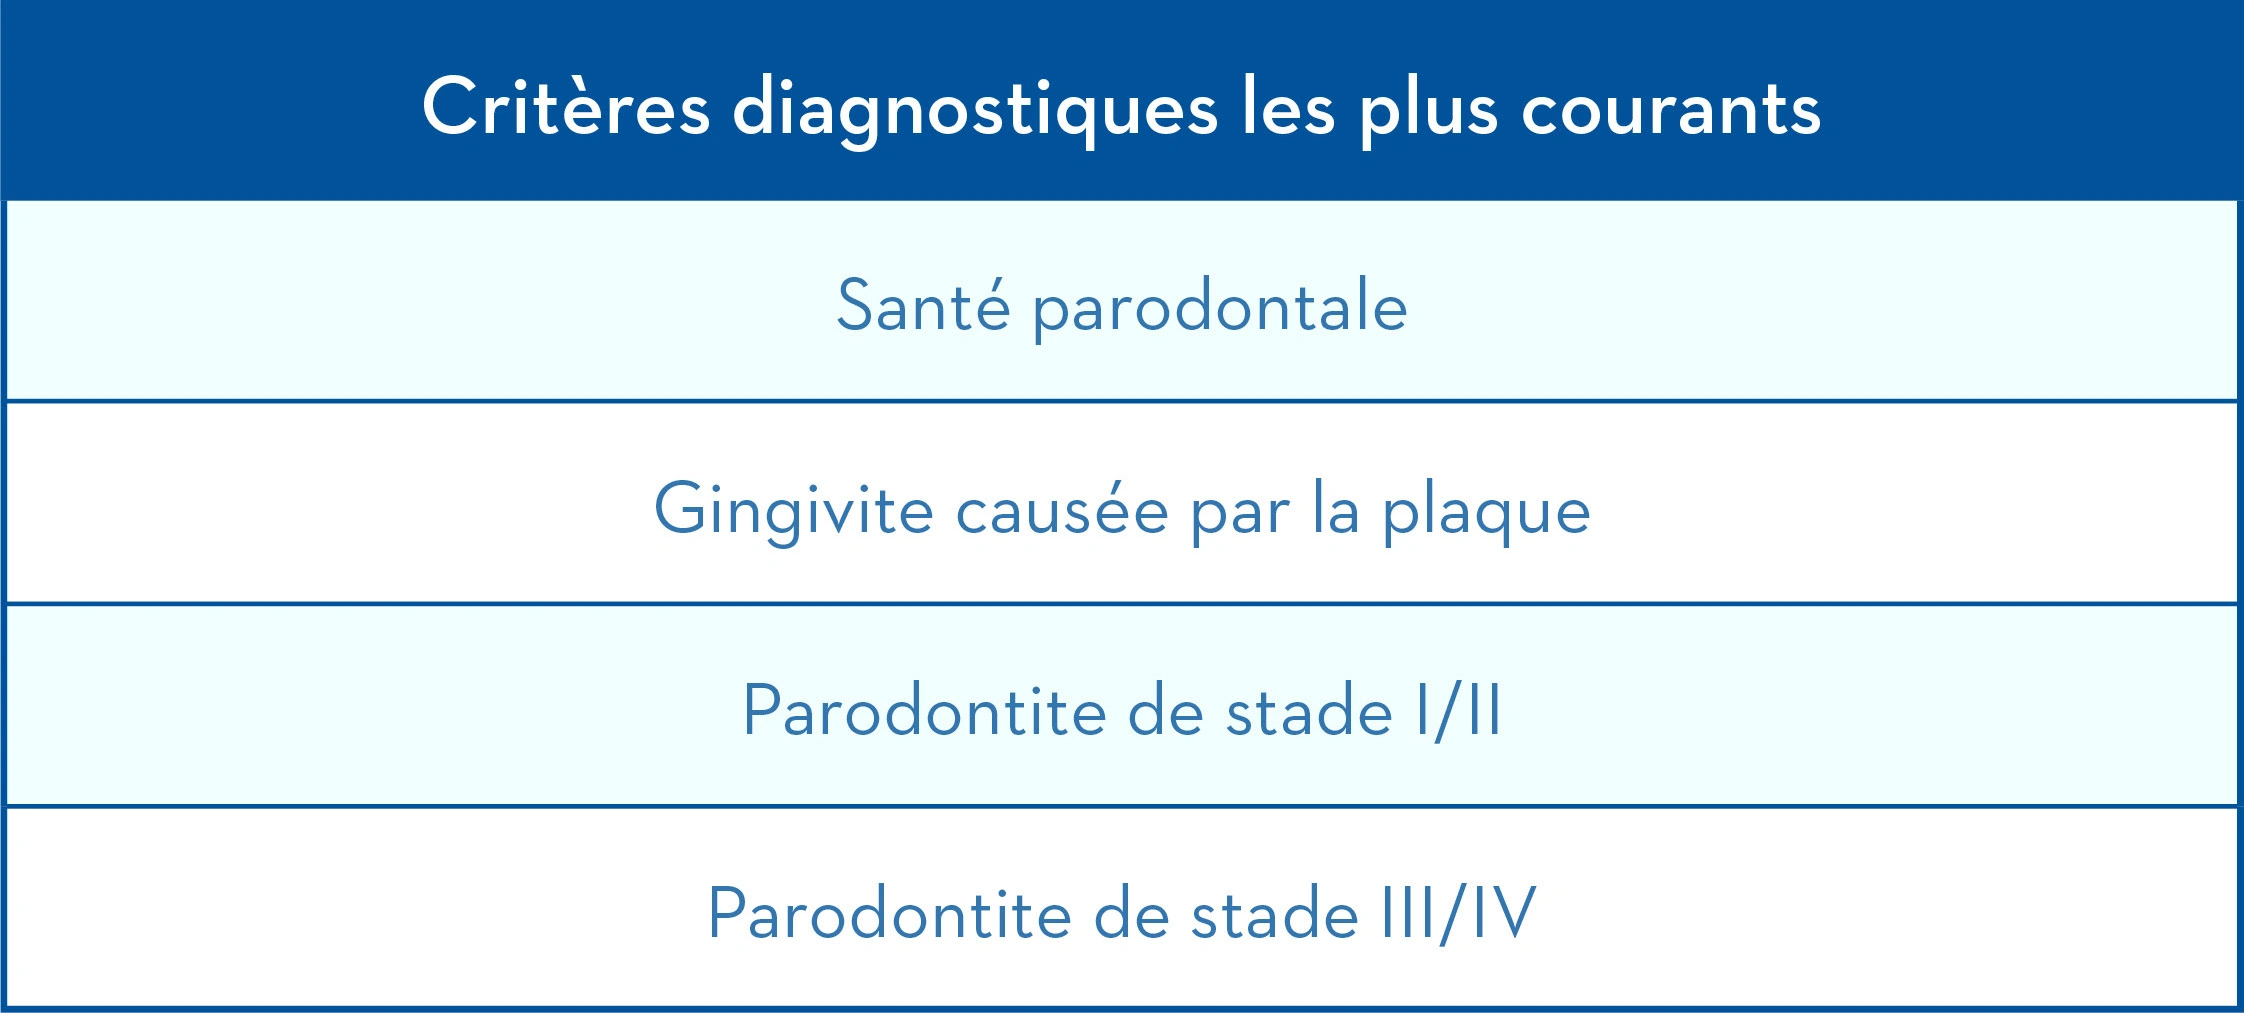 Most Common Diagnostic Criteria Periodontal health Plaque induced gingivitis Stage I/II periodontitis Stage III/IV periodontitis